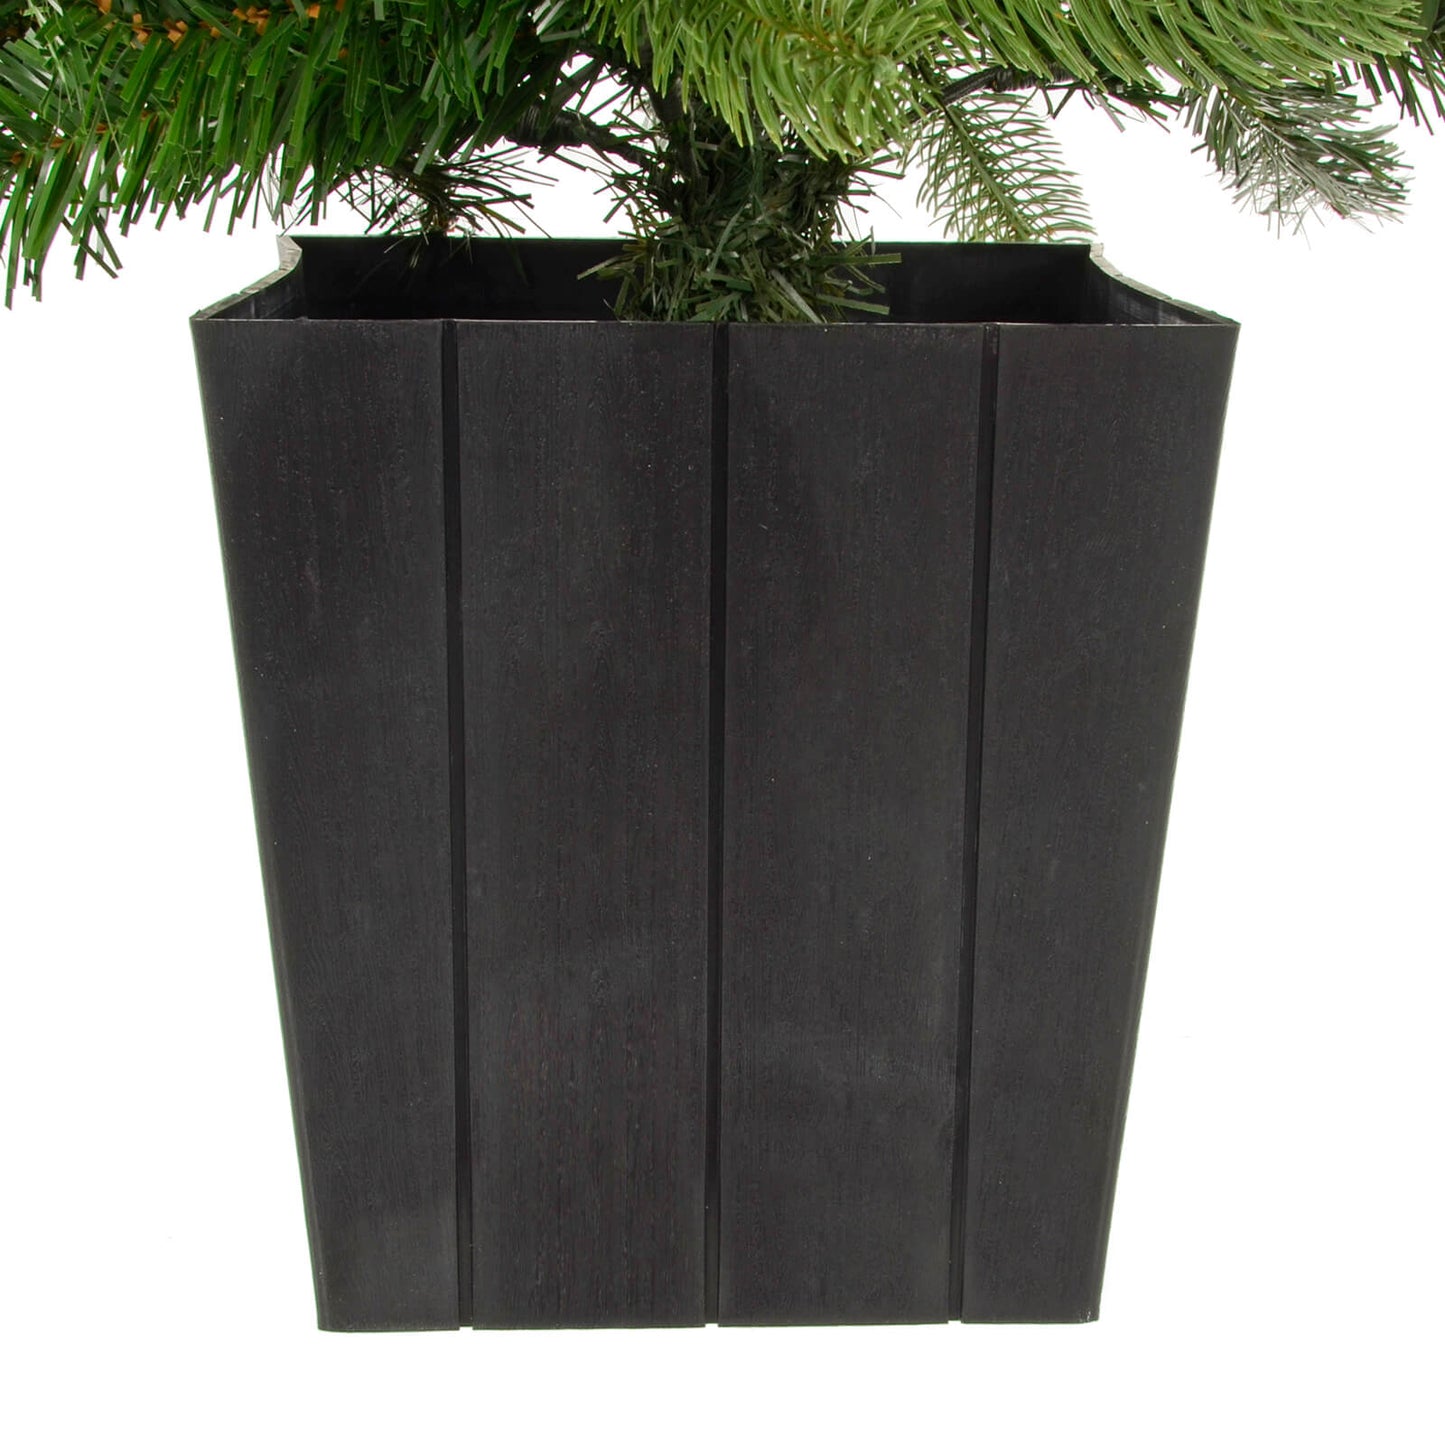 Mr Crimbo 90cm Christmas Tree In Pot Green Artificial Mixed Pine - MrCrimbo.co.uk -XS7271 - -christmas tree